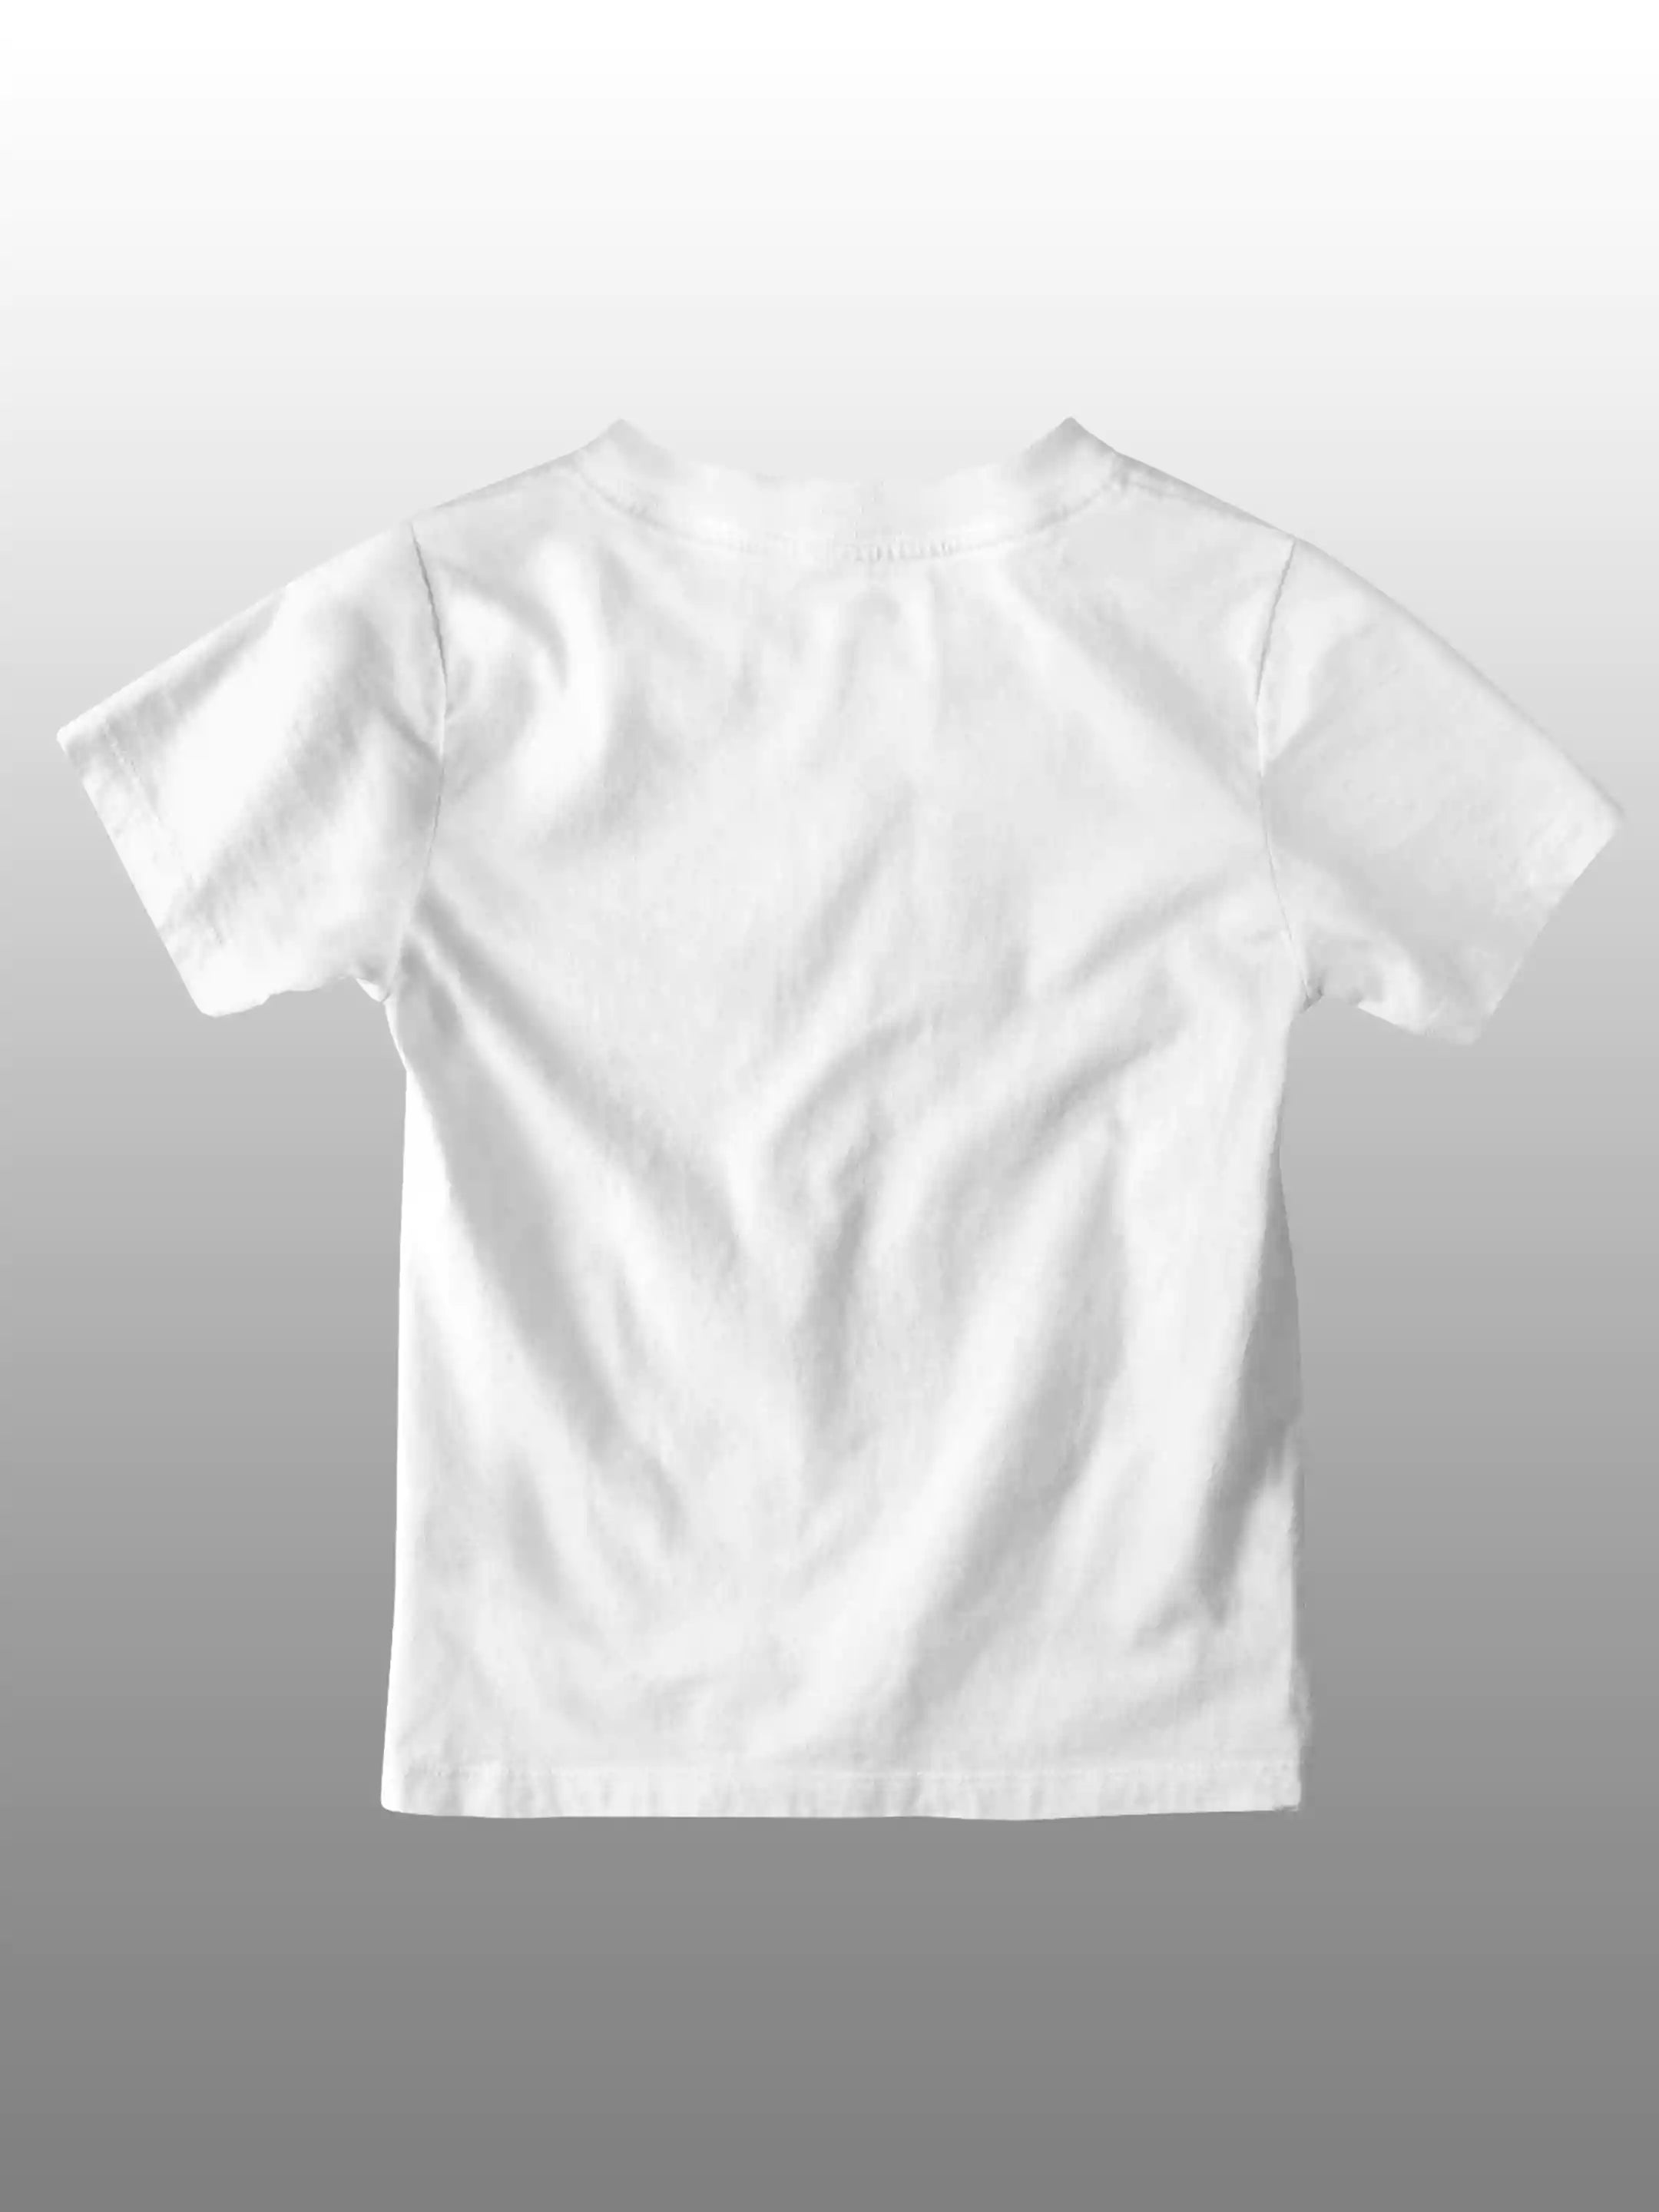 Nit Bolaycha White - Sukhiaatma Unisex Graphic Printed Kids T-shirt